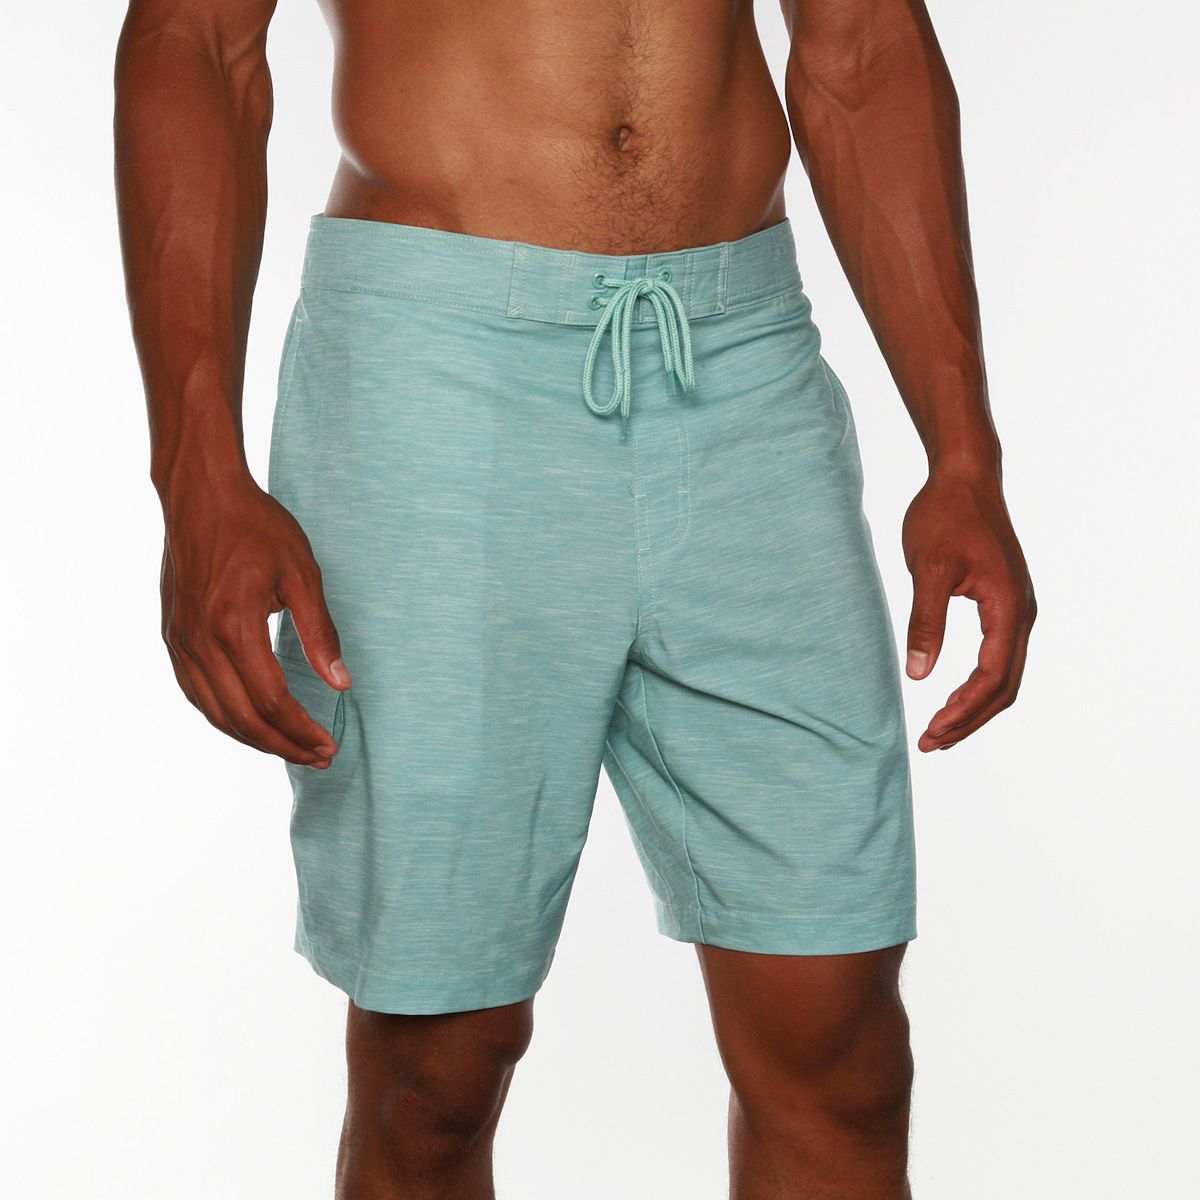 APTRO Mens Shorts Swim Trunks Casual Surf Beach Shorts Quick Dry Board Shorts Casual Home Wear Mens Pajamas S-4XL 02 